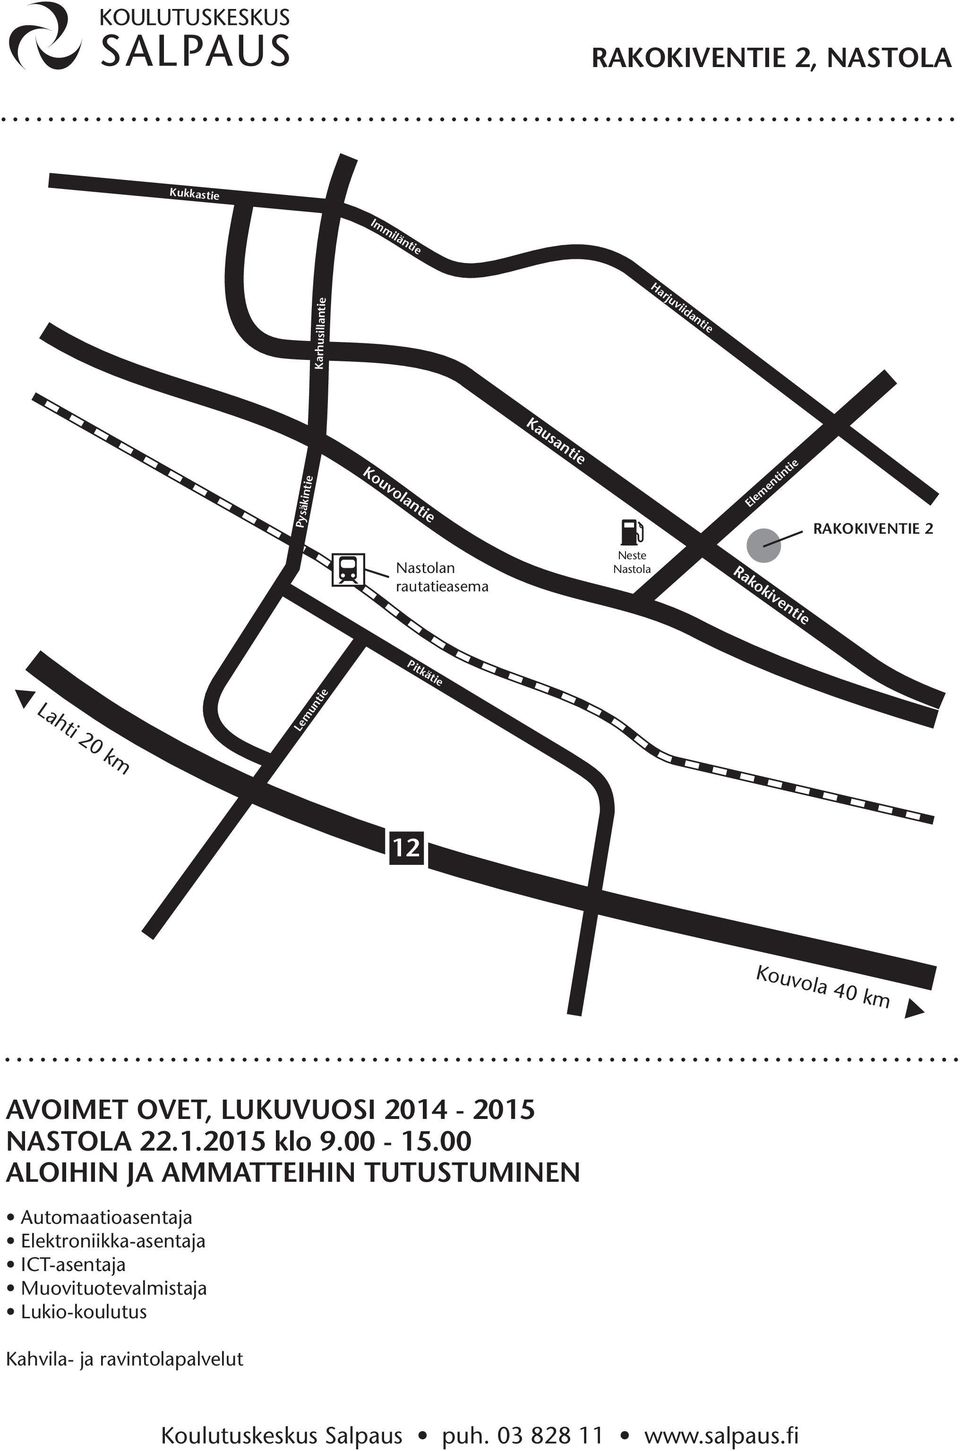 rautatieasema Neste Nastola Lahti 20 km Lemuntie 12 Kouvola 40 km NASTOLA 22.1.2015 klo 9.